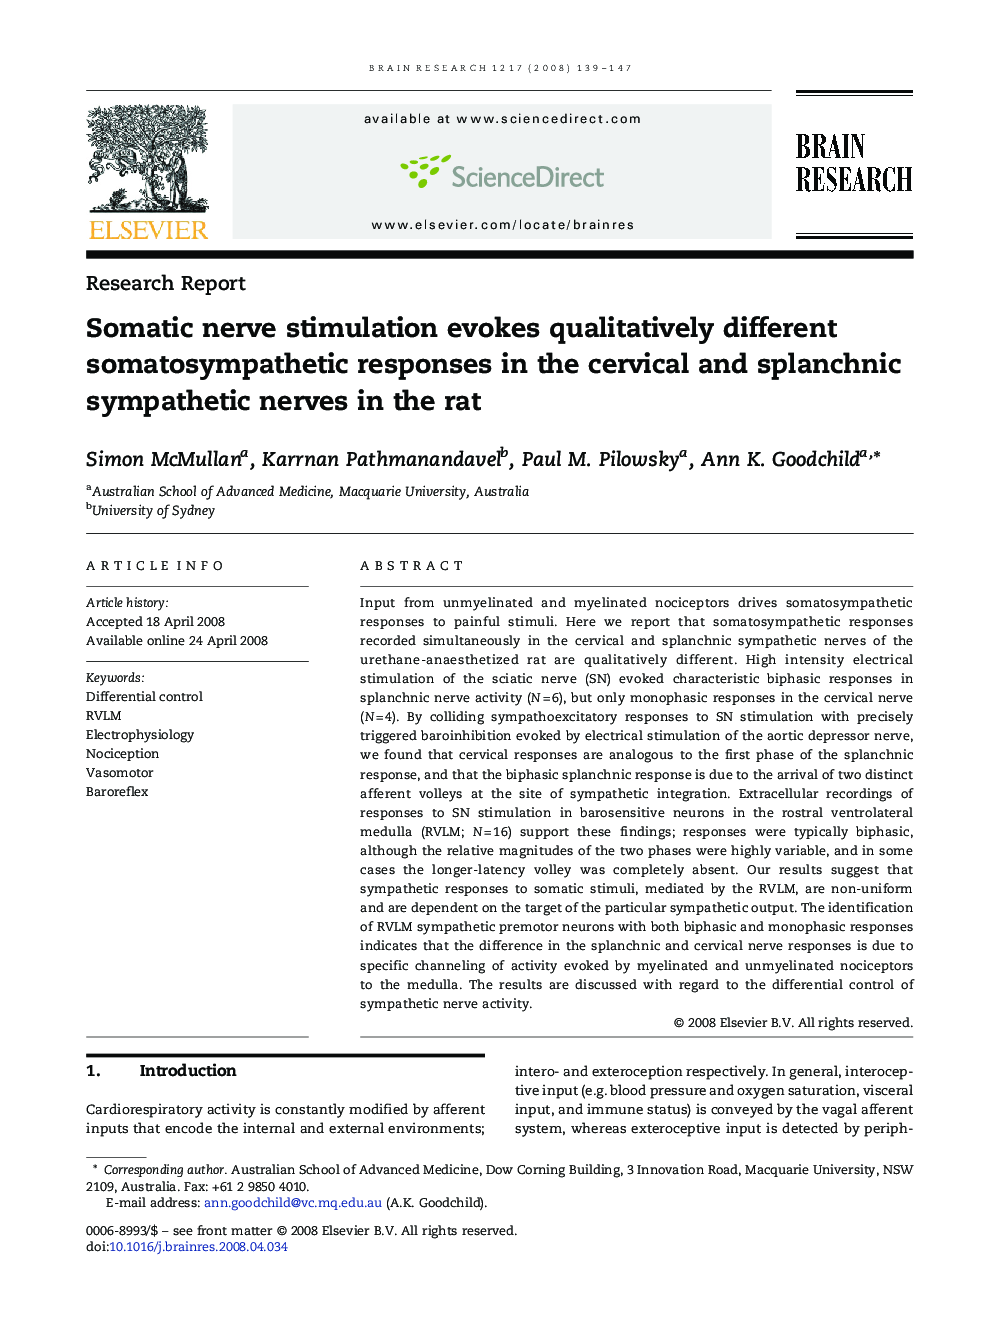 Somatic nerve stimulation evokes qualitatively different somatosympathetic responses in the cervical and splanchnic sympathetic nerves in the rat